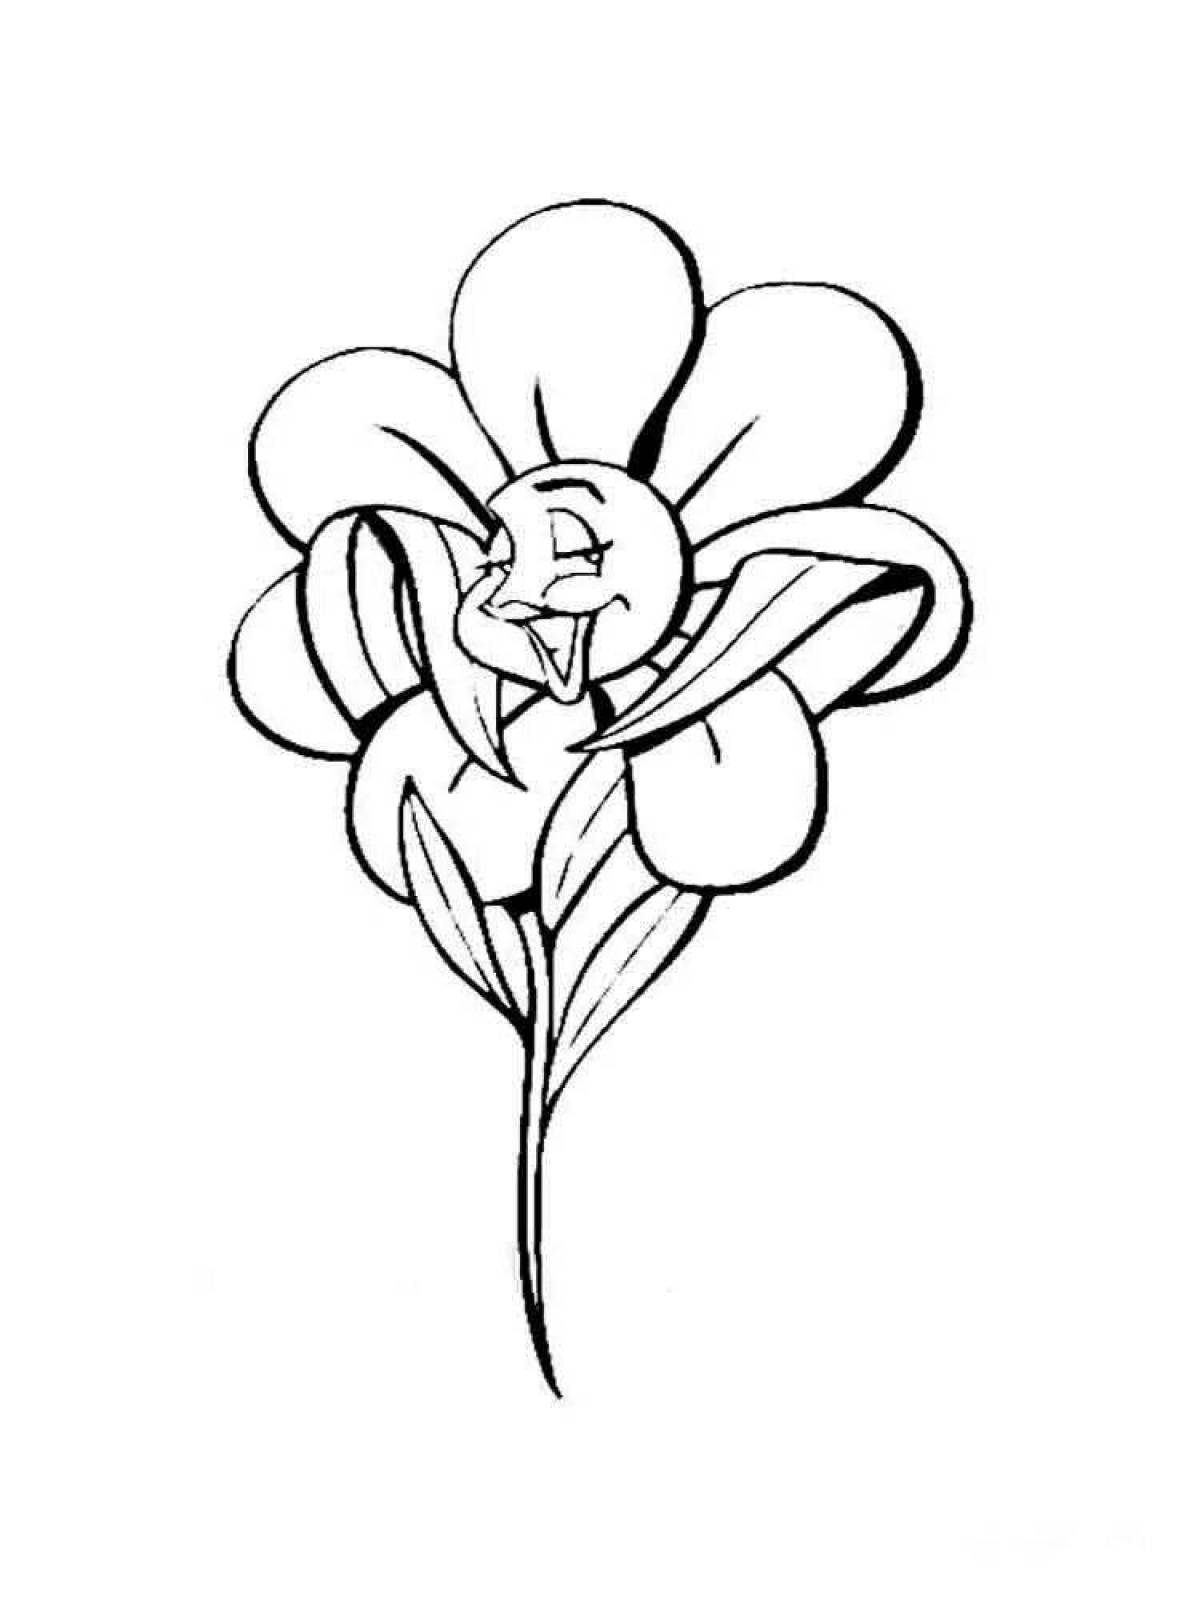 Coloring page joyful chamomile flower